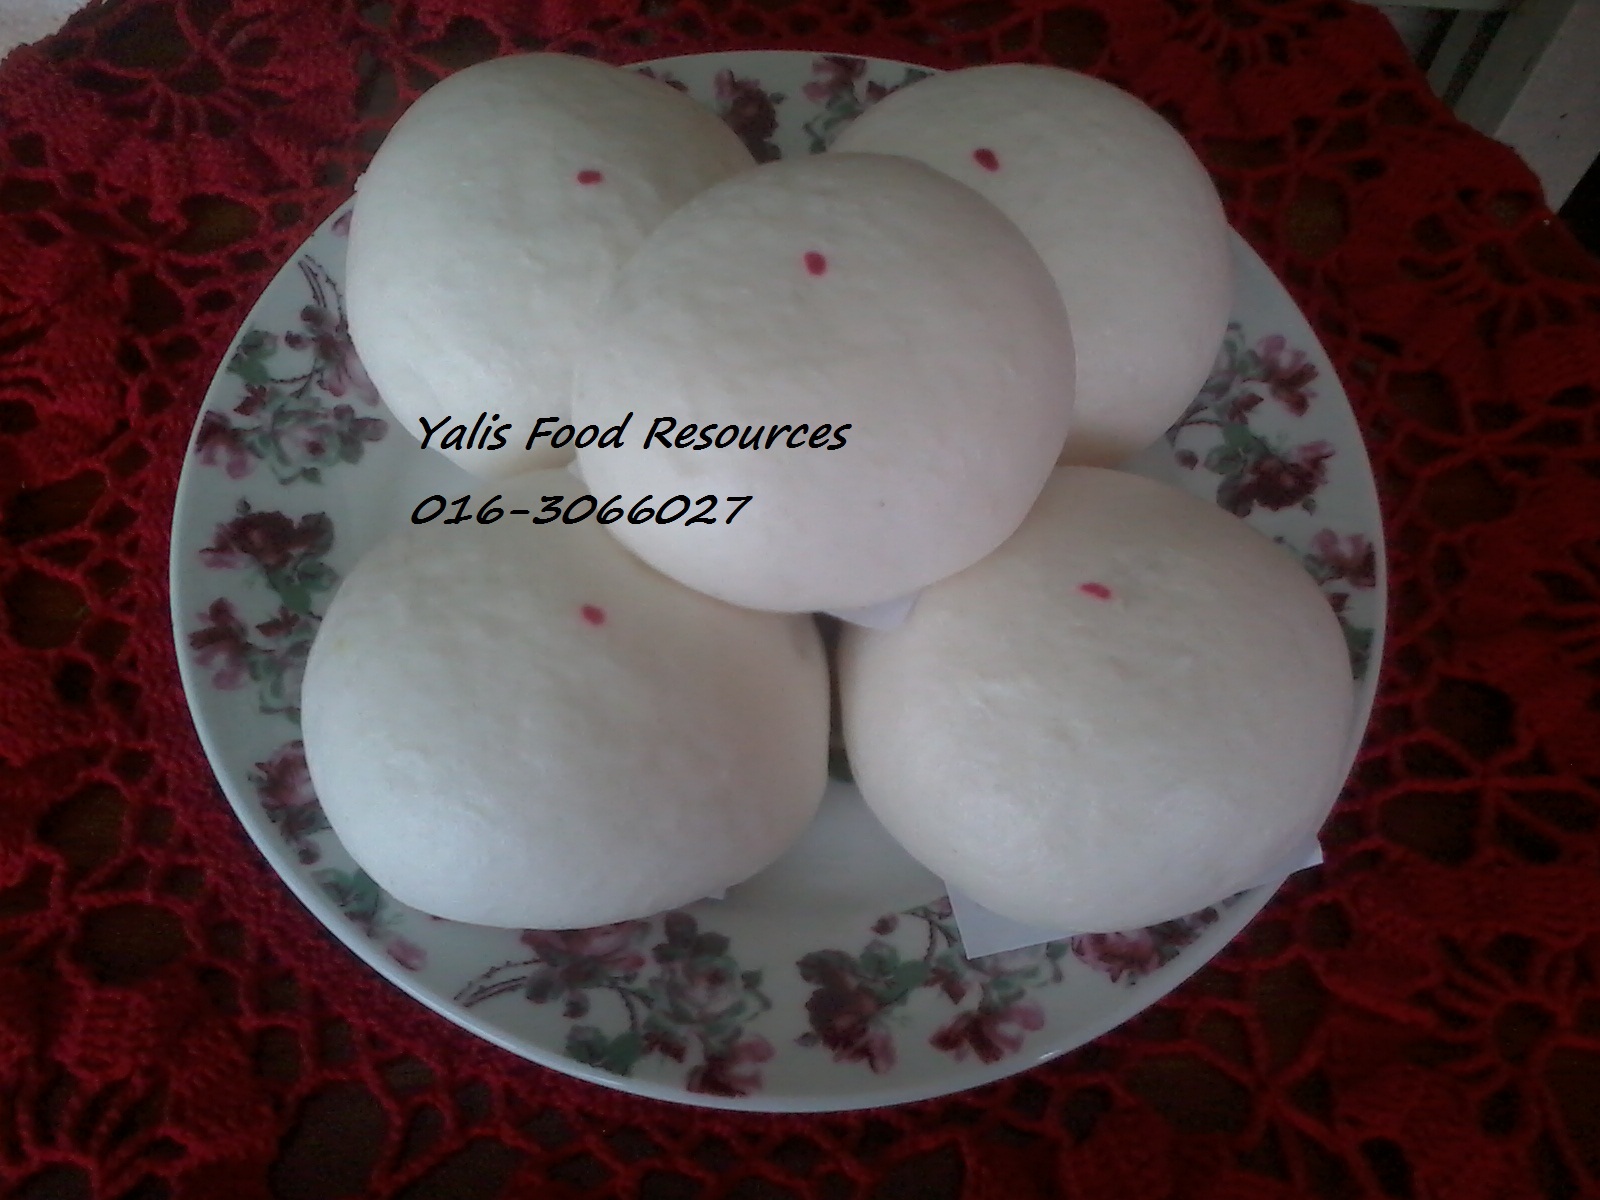 Yalis Food Resources: Produk Frozen Food YFR